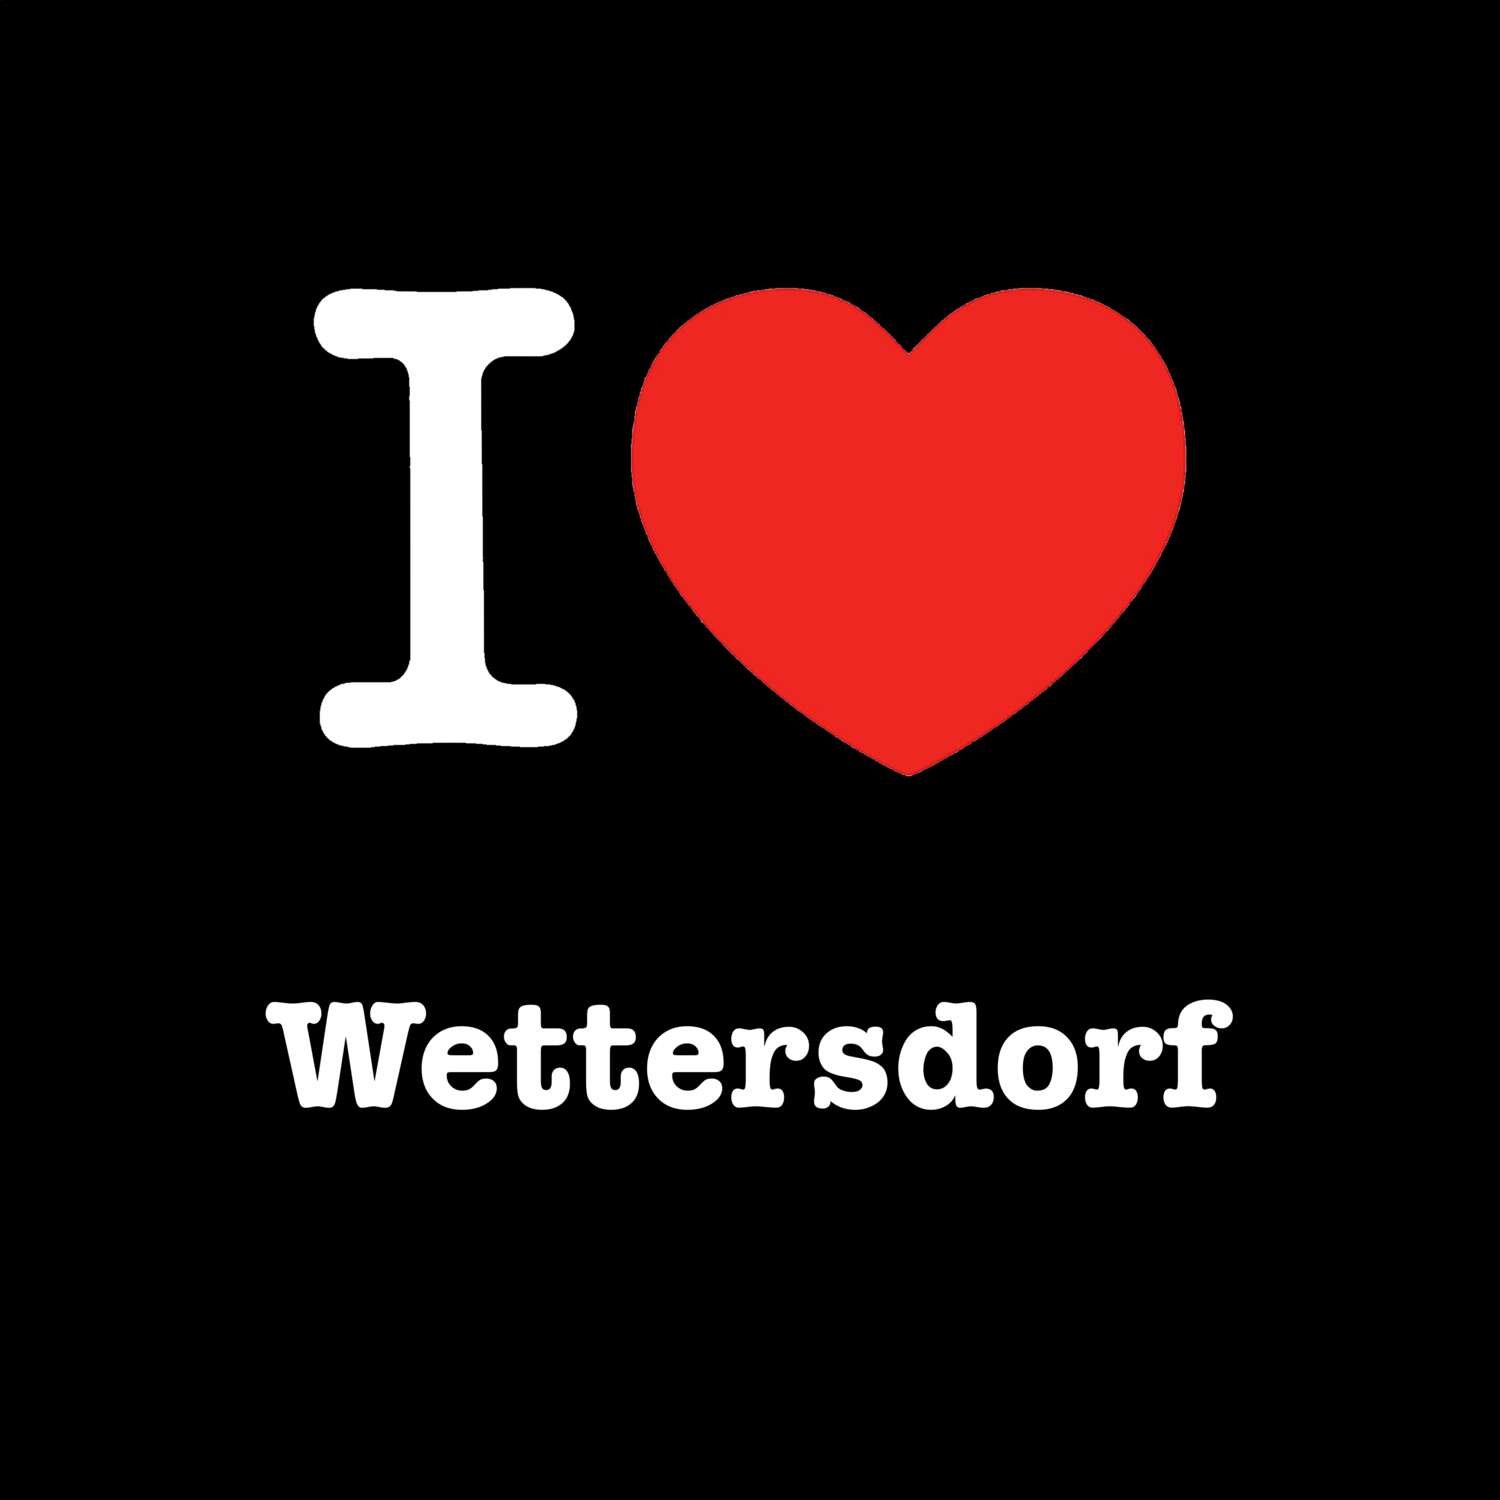 Wettersdorf T-Shirt »I love«